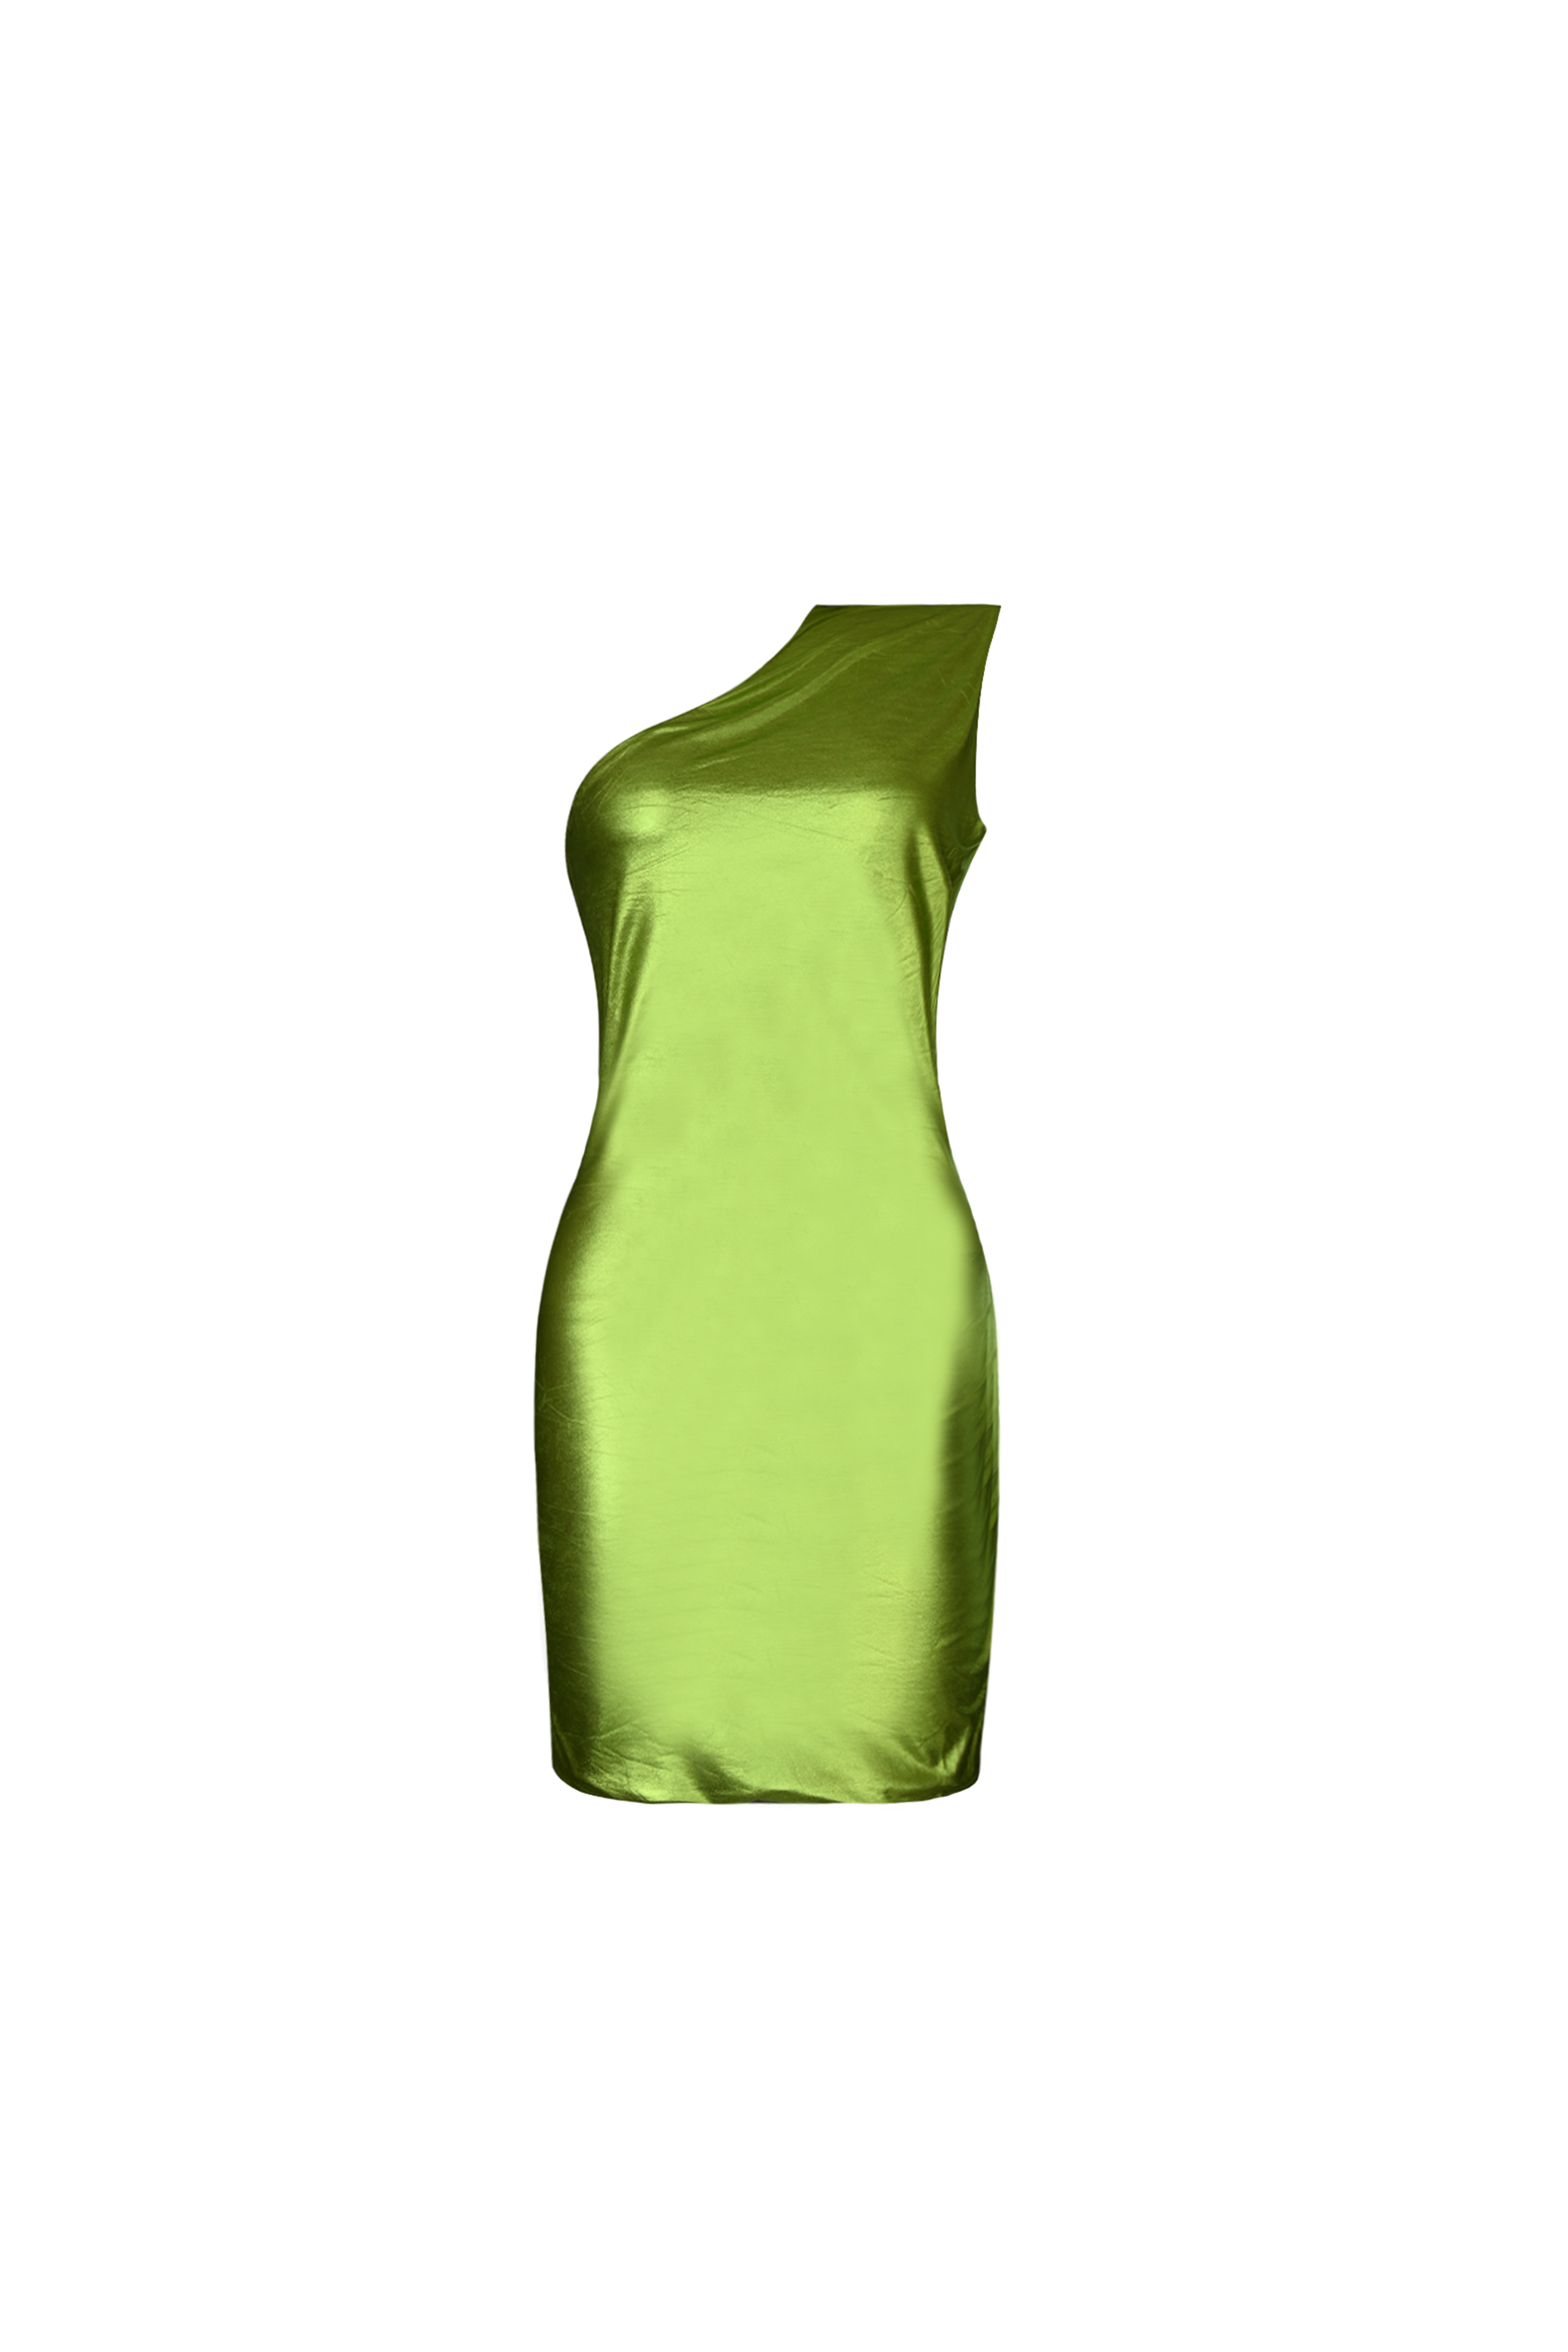 Klea Green Dress